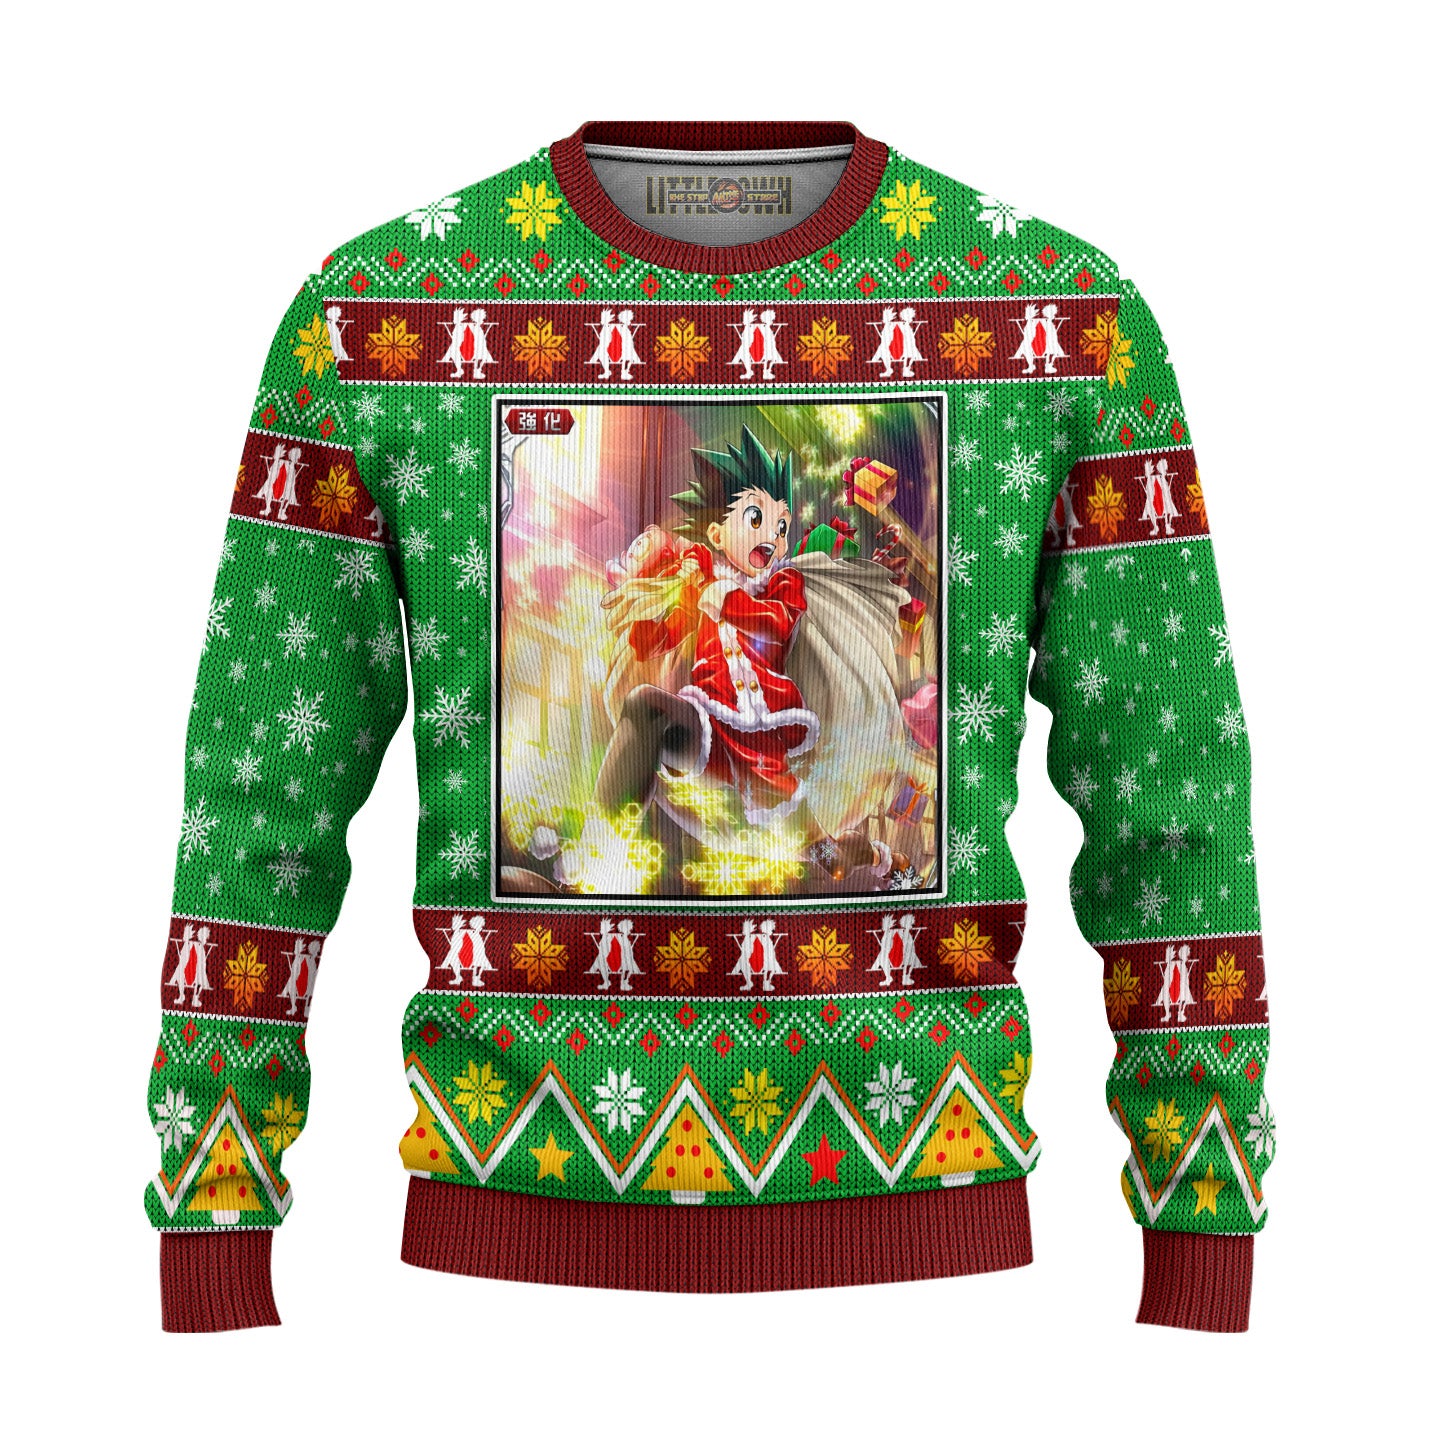 Gon Freecss Anime Ugly Christmas Sweater Hunter x Hunter Gift For Fans